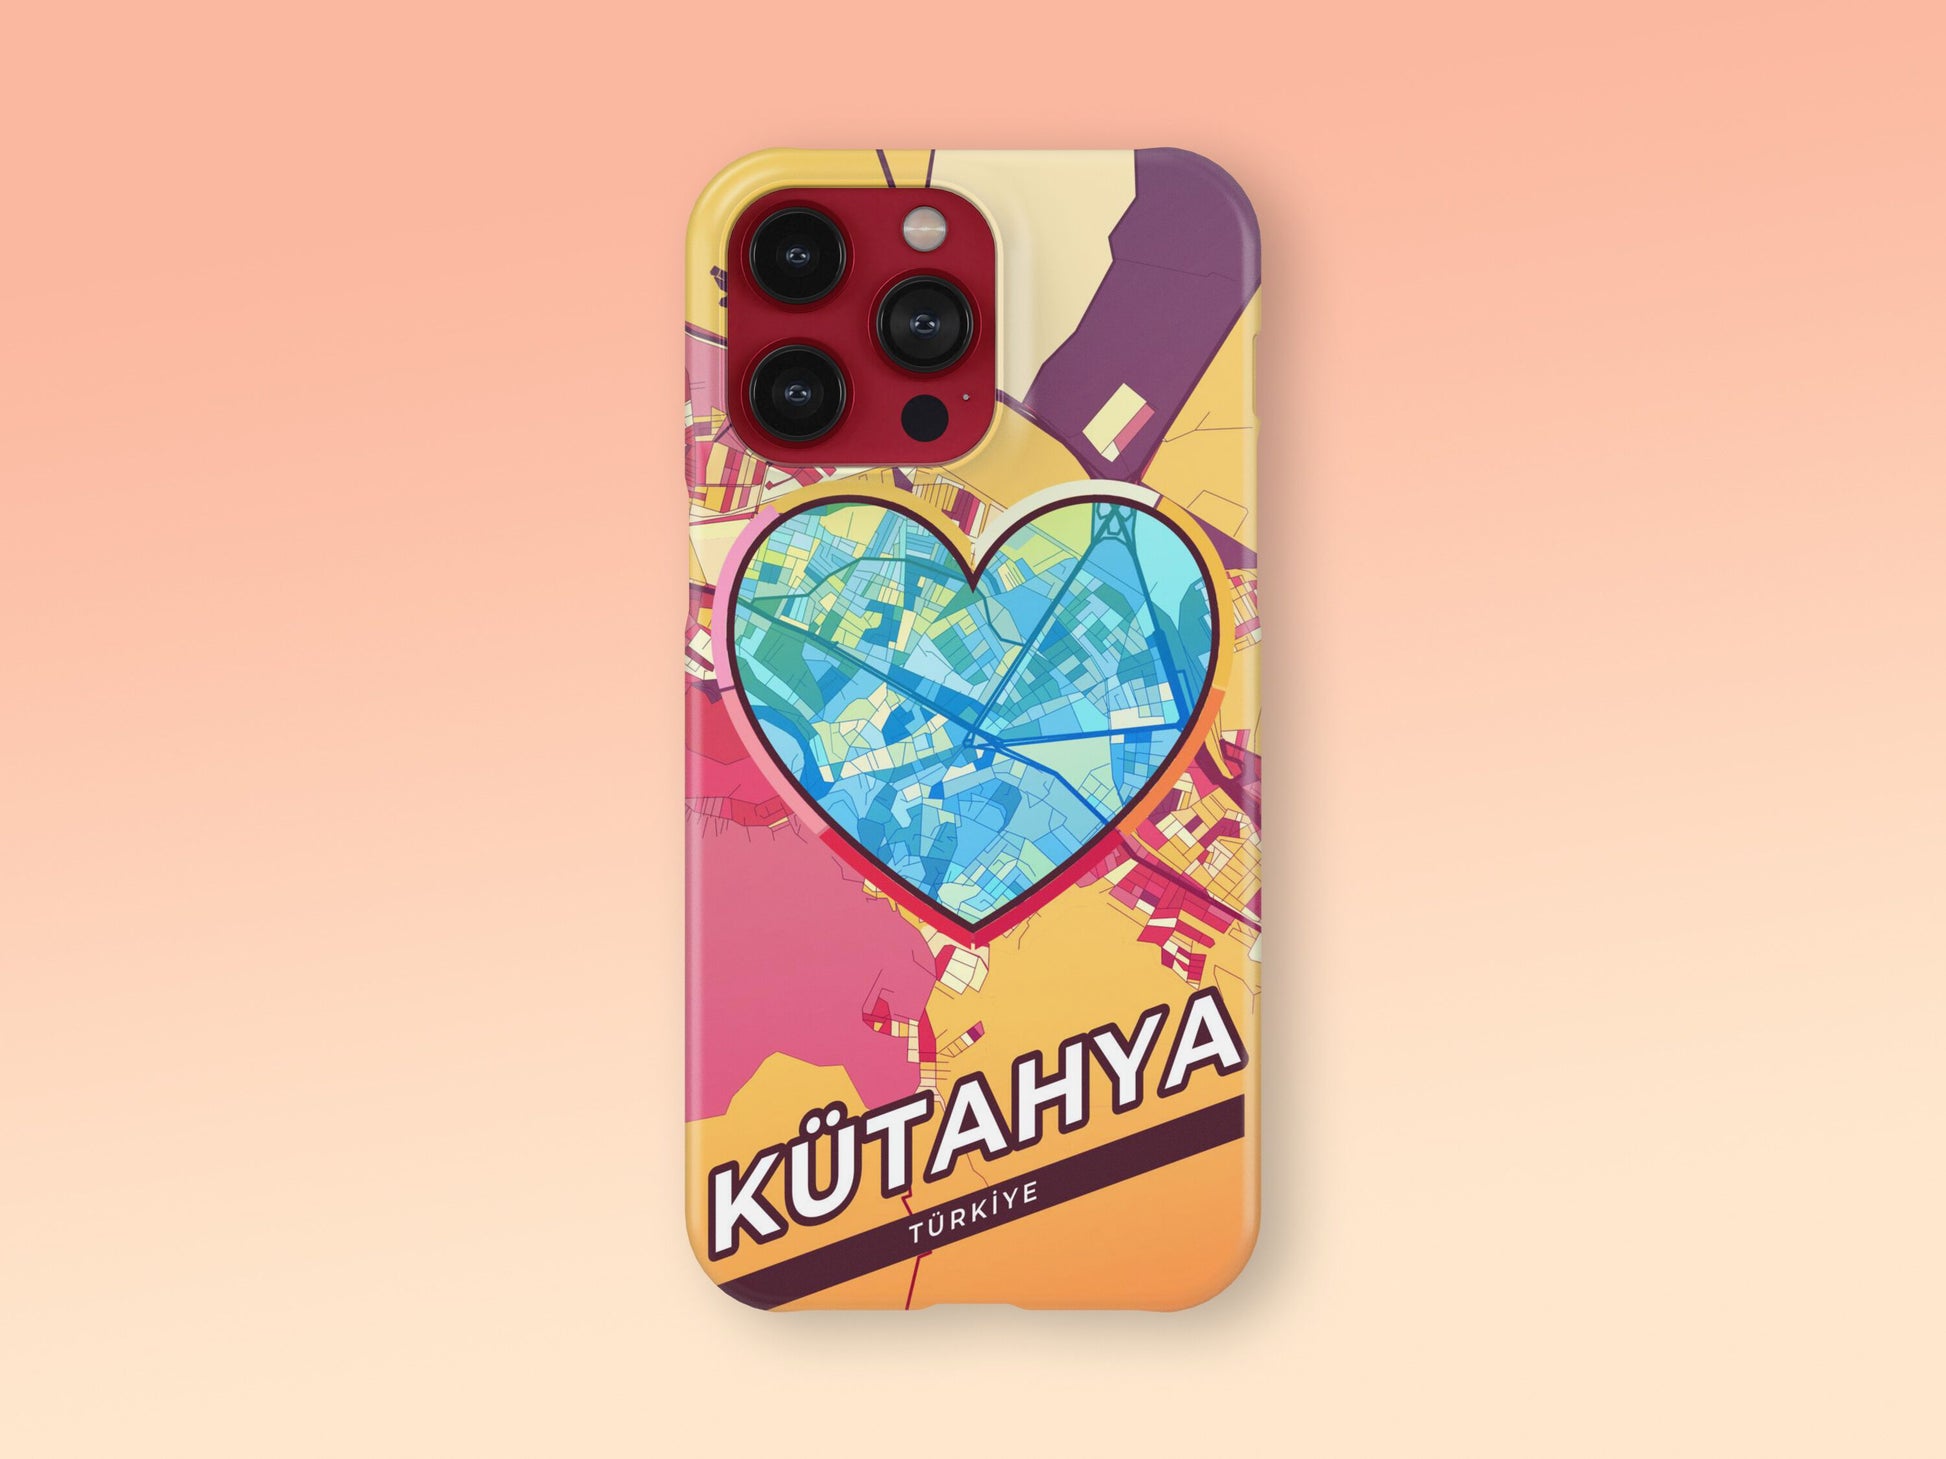 Kütahya Turkey slim phone case with colorful icon. Birthday, wedding or housewarming gift. Couple match cases. 2